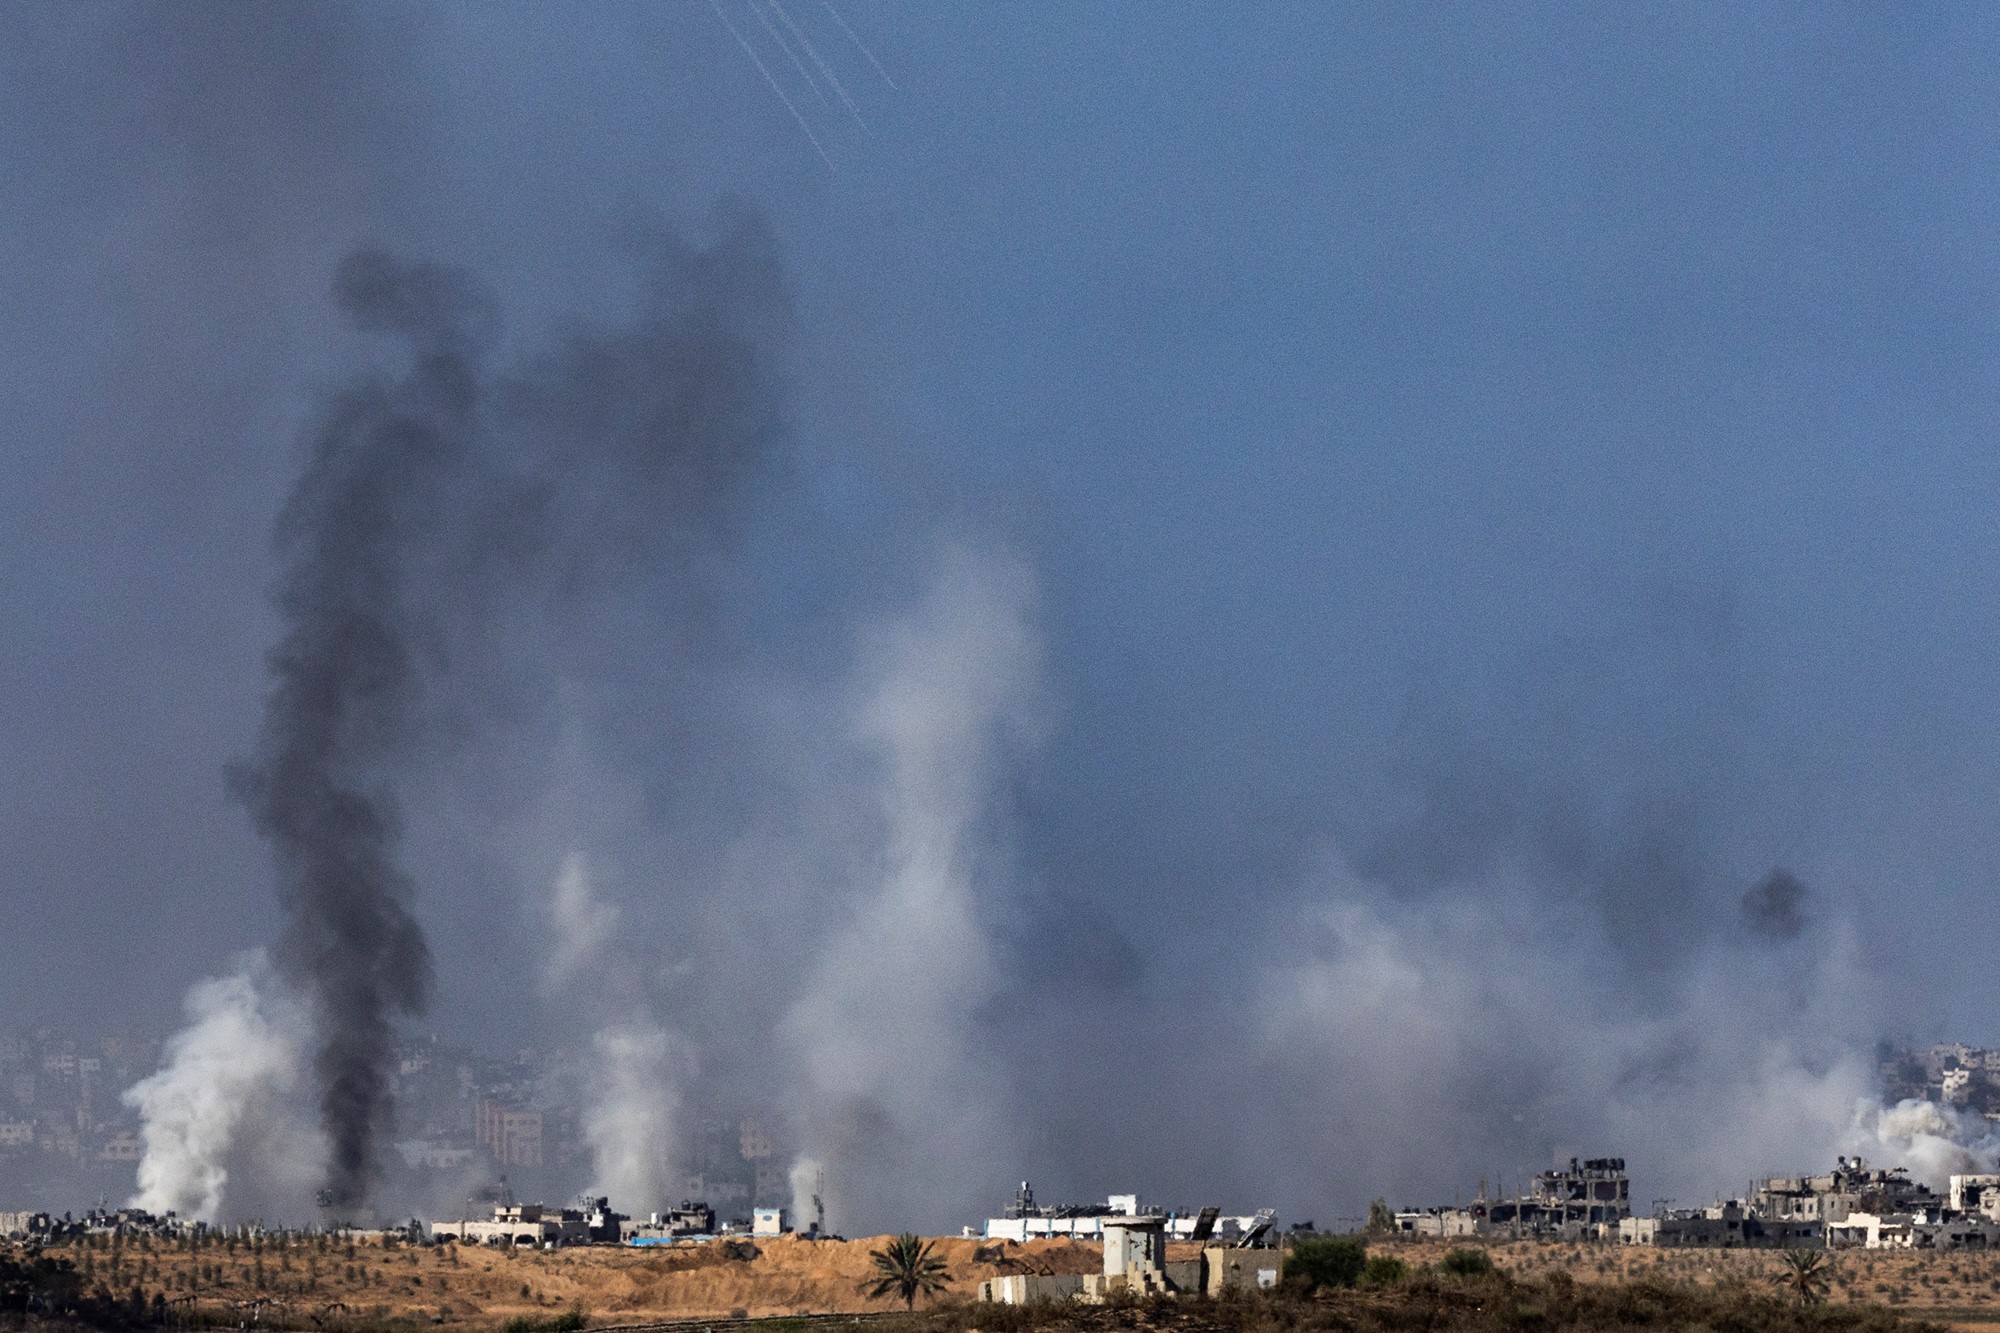 Smoke is rising over Gaza.